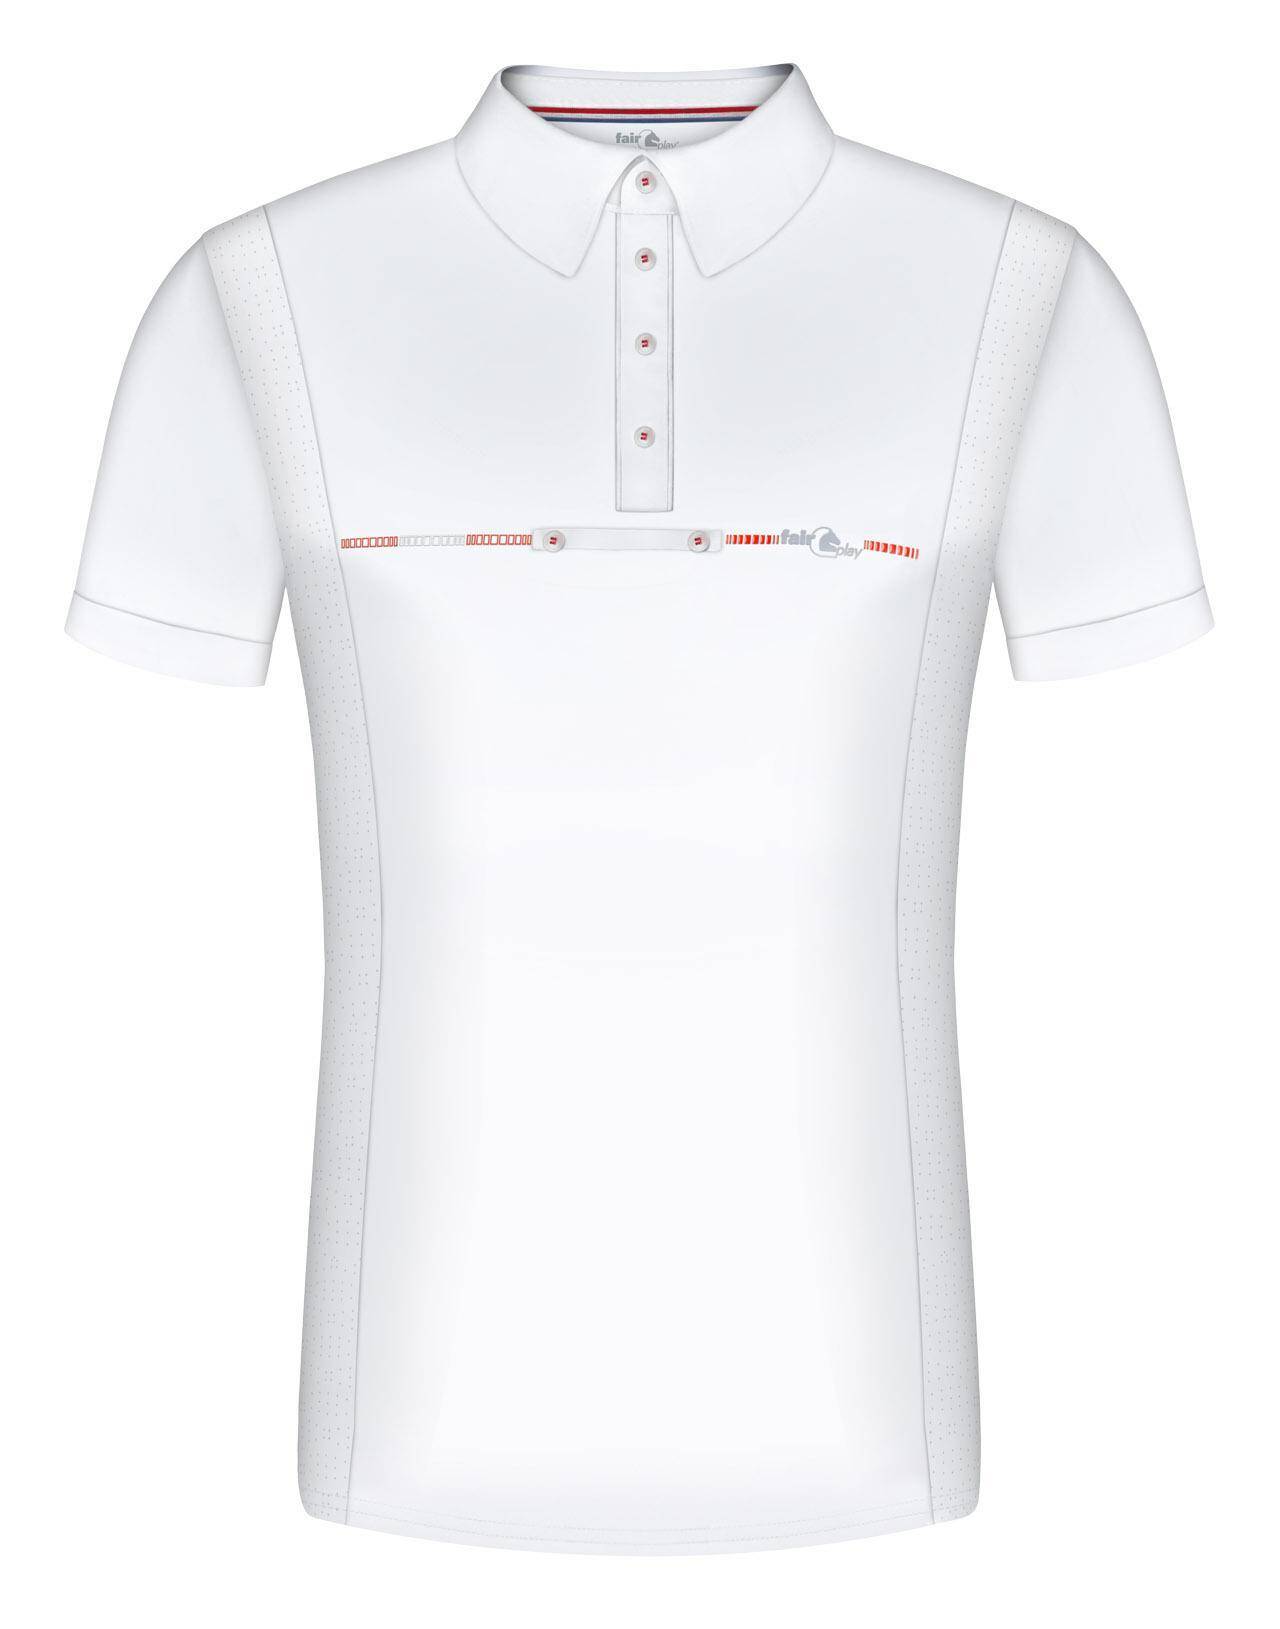 Koszulka konkursowa FP DAVID biały  44